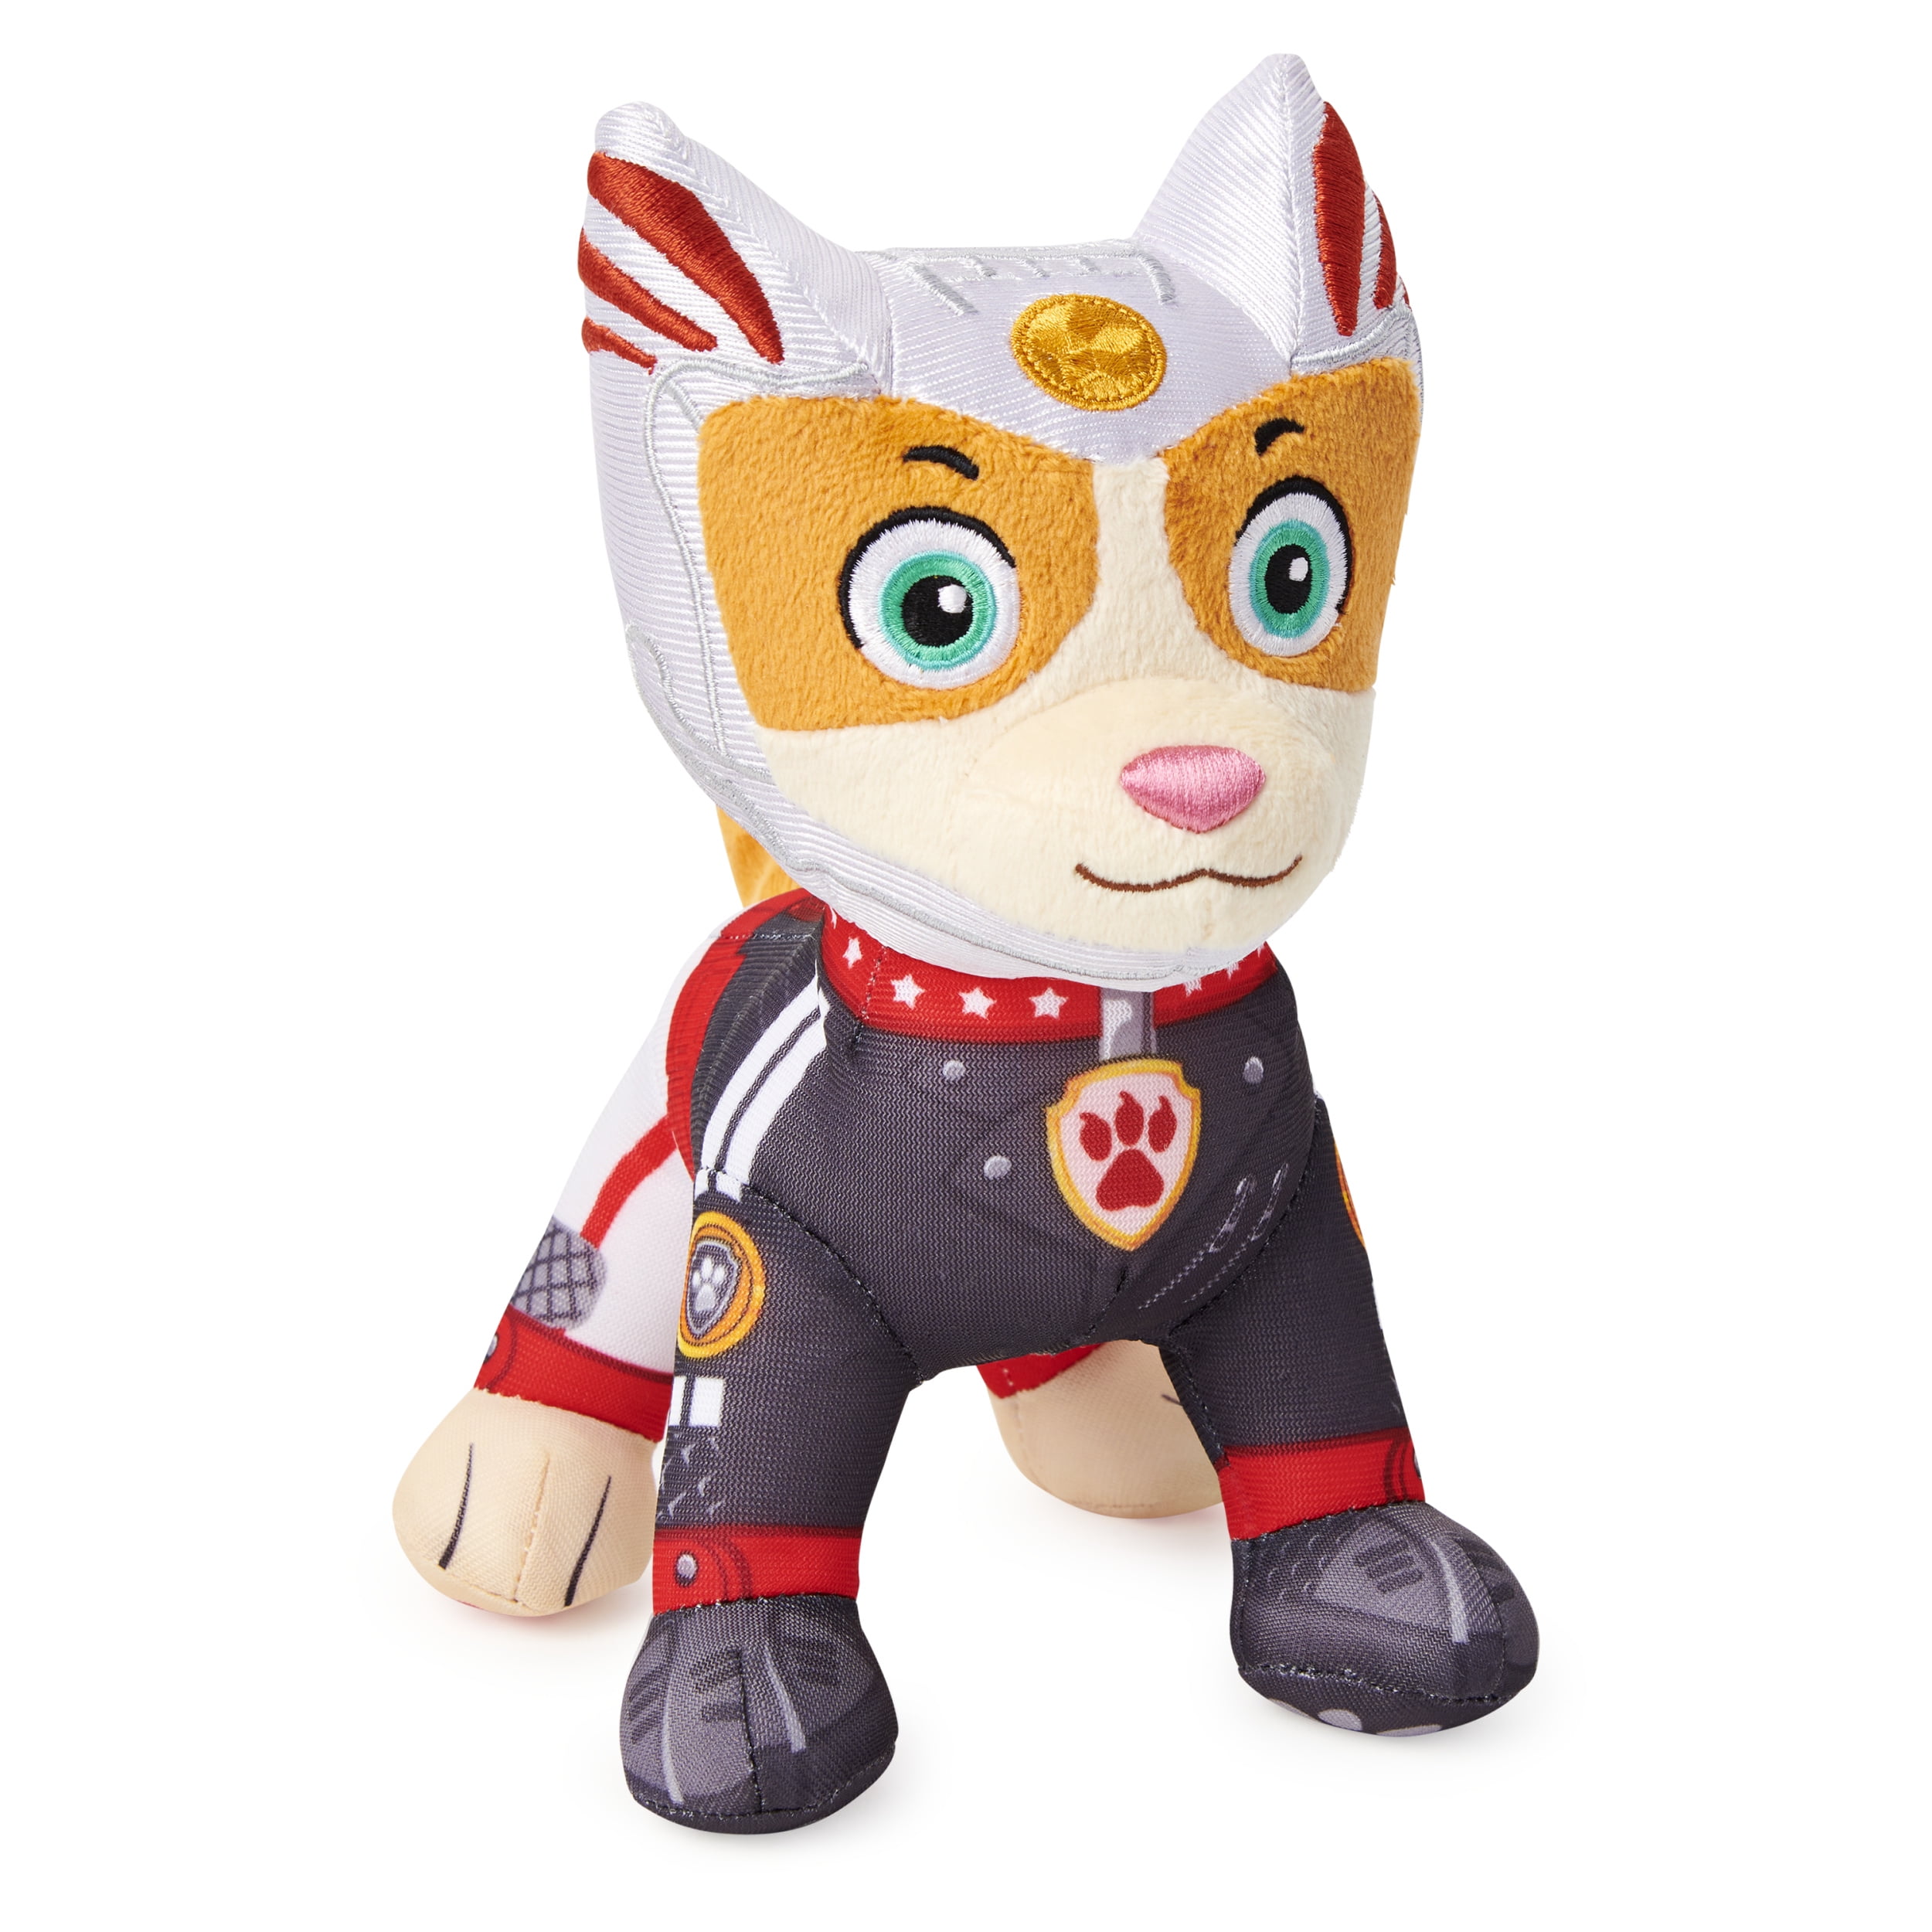 PAW Patrol, Moto Pups Wildcat, Stuffed Animal Plush Toy, 8